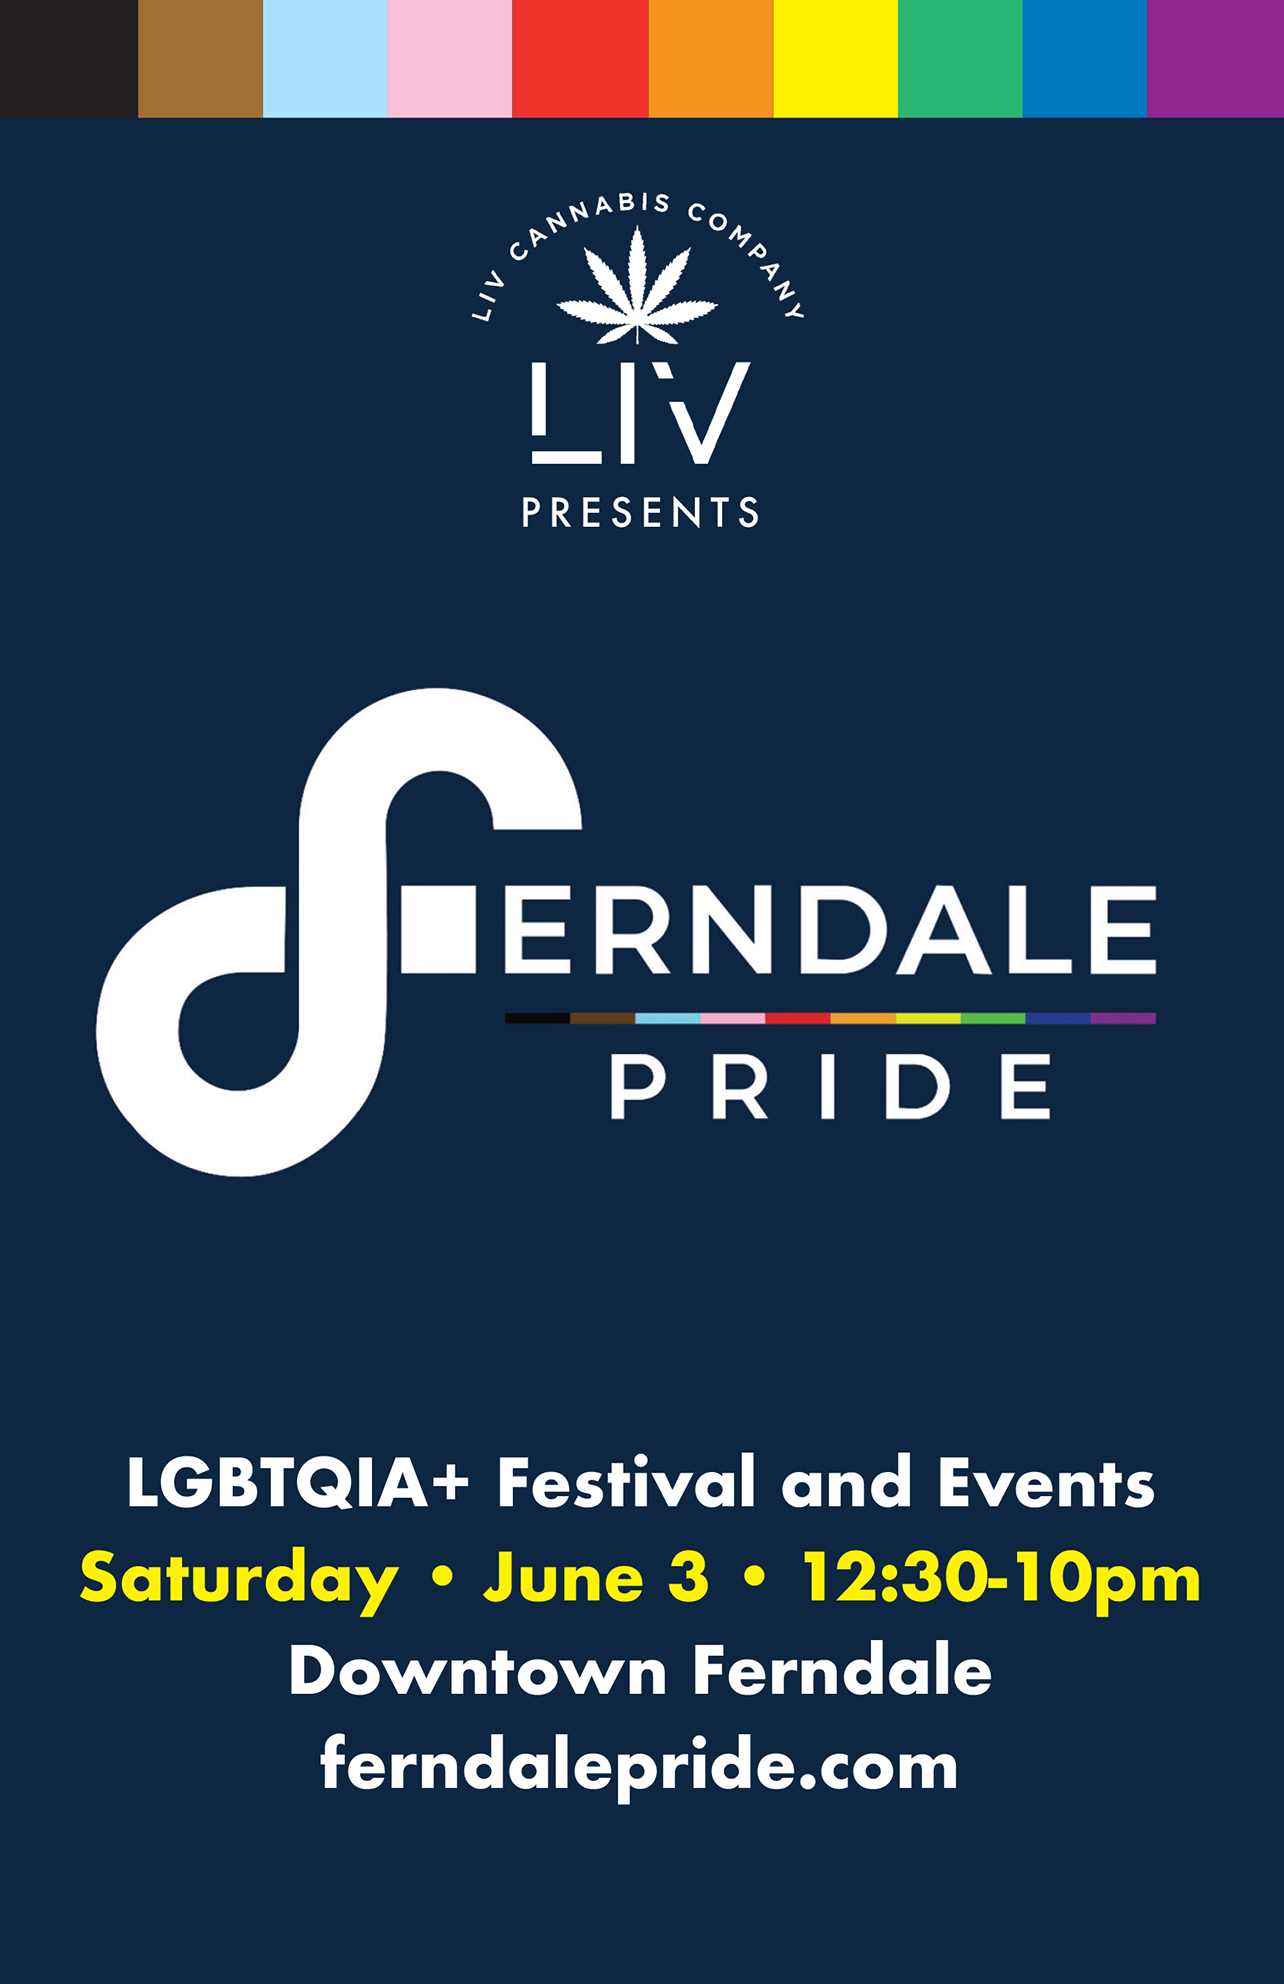 Happy Pride, Ferndale! Ferndale Pride